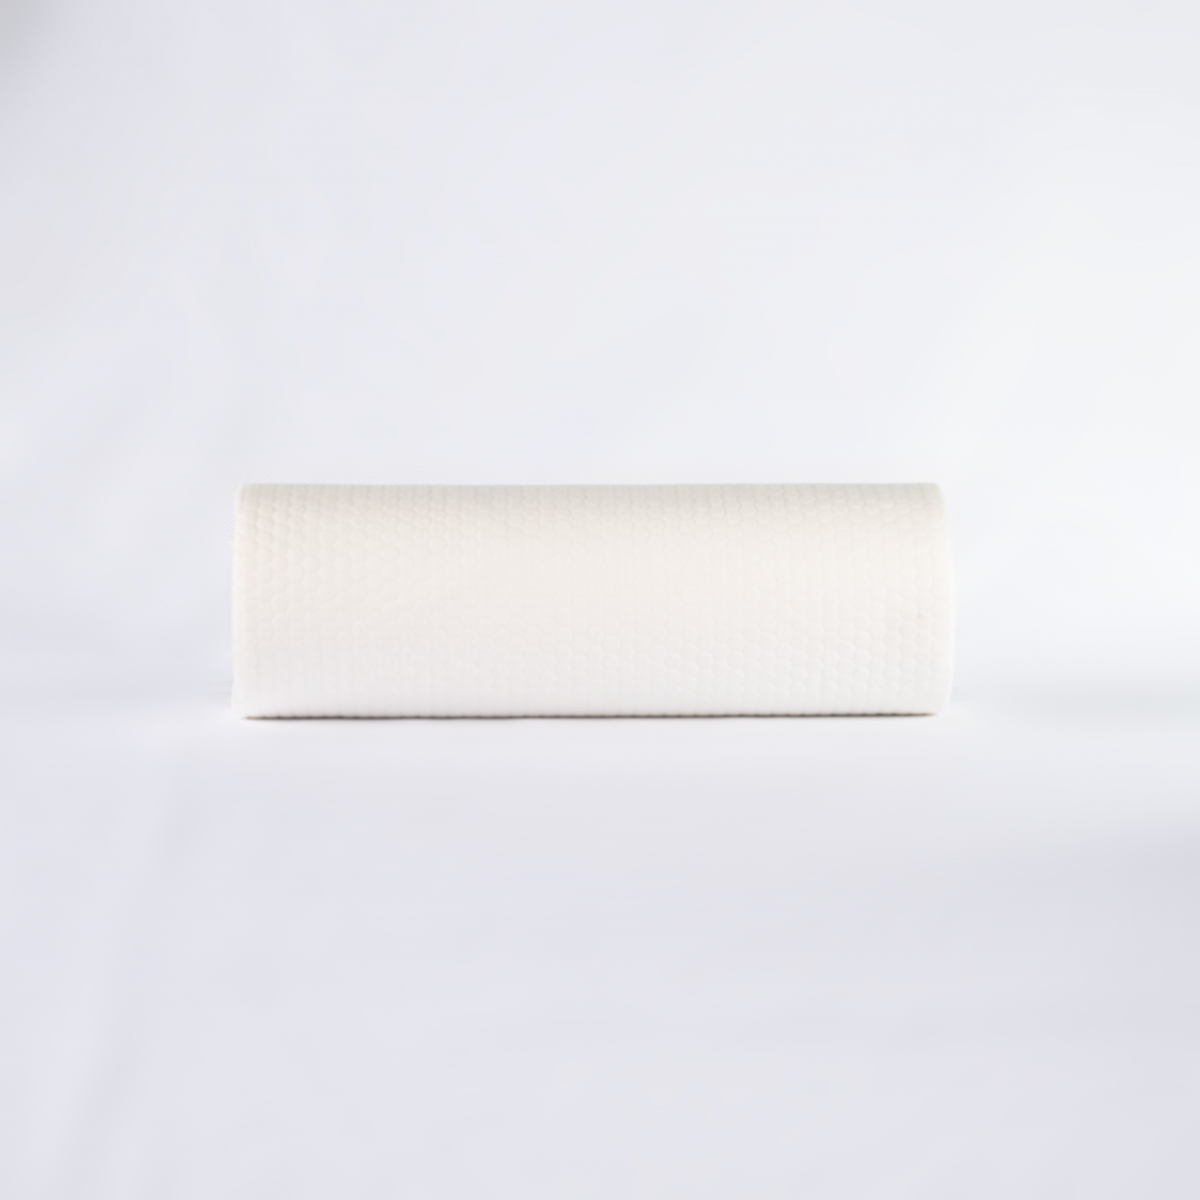 Disposable non woven paper towel WF-0007-טקסטיל למטבח, סינר, כפפה לתנור, מחזיק סירים, מגבת תה, שכמיית עיצוב שיער